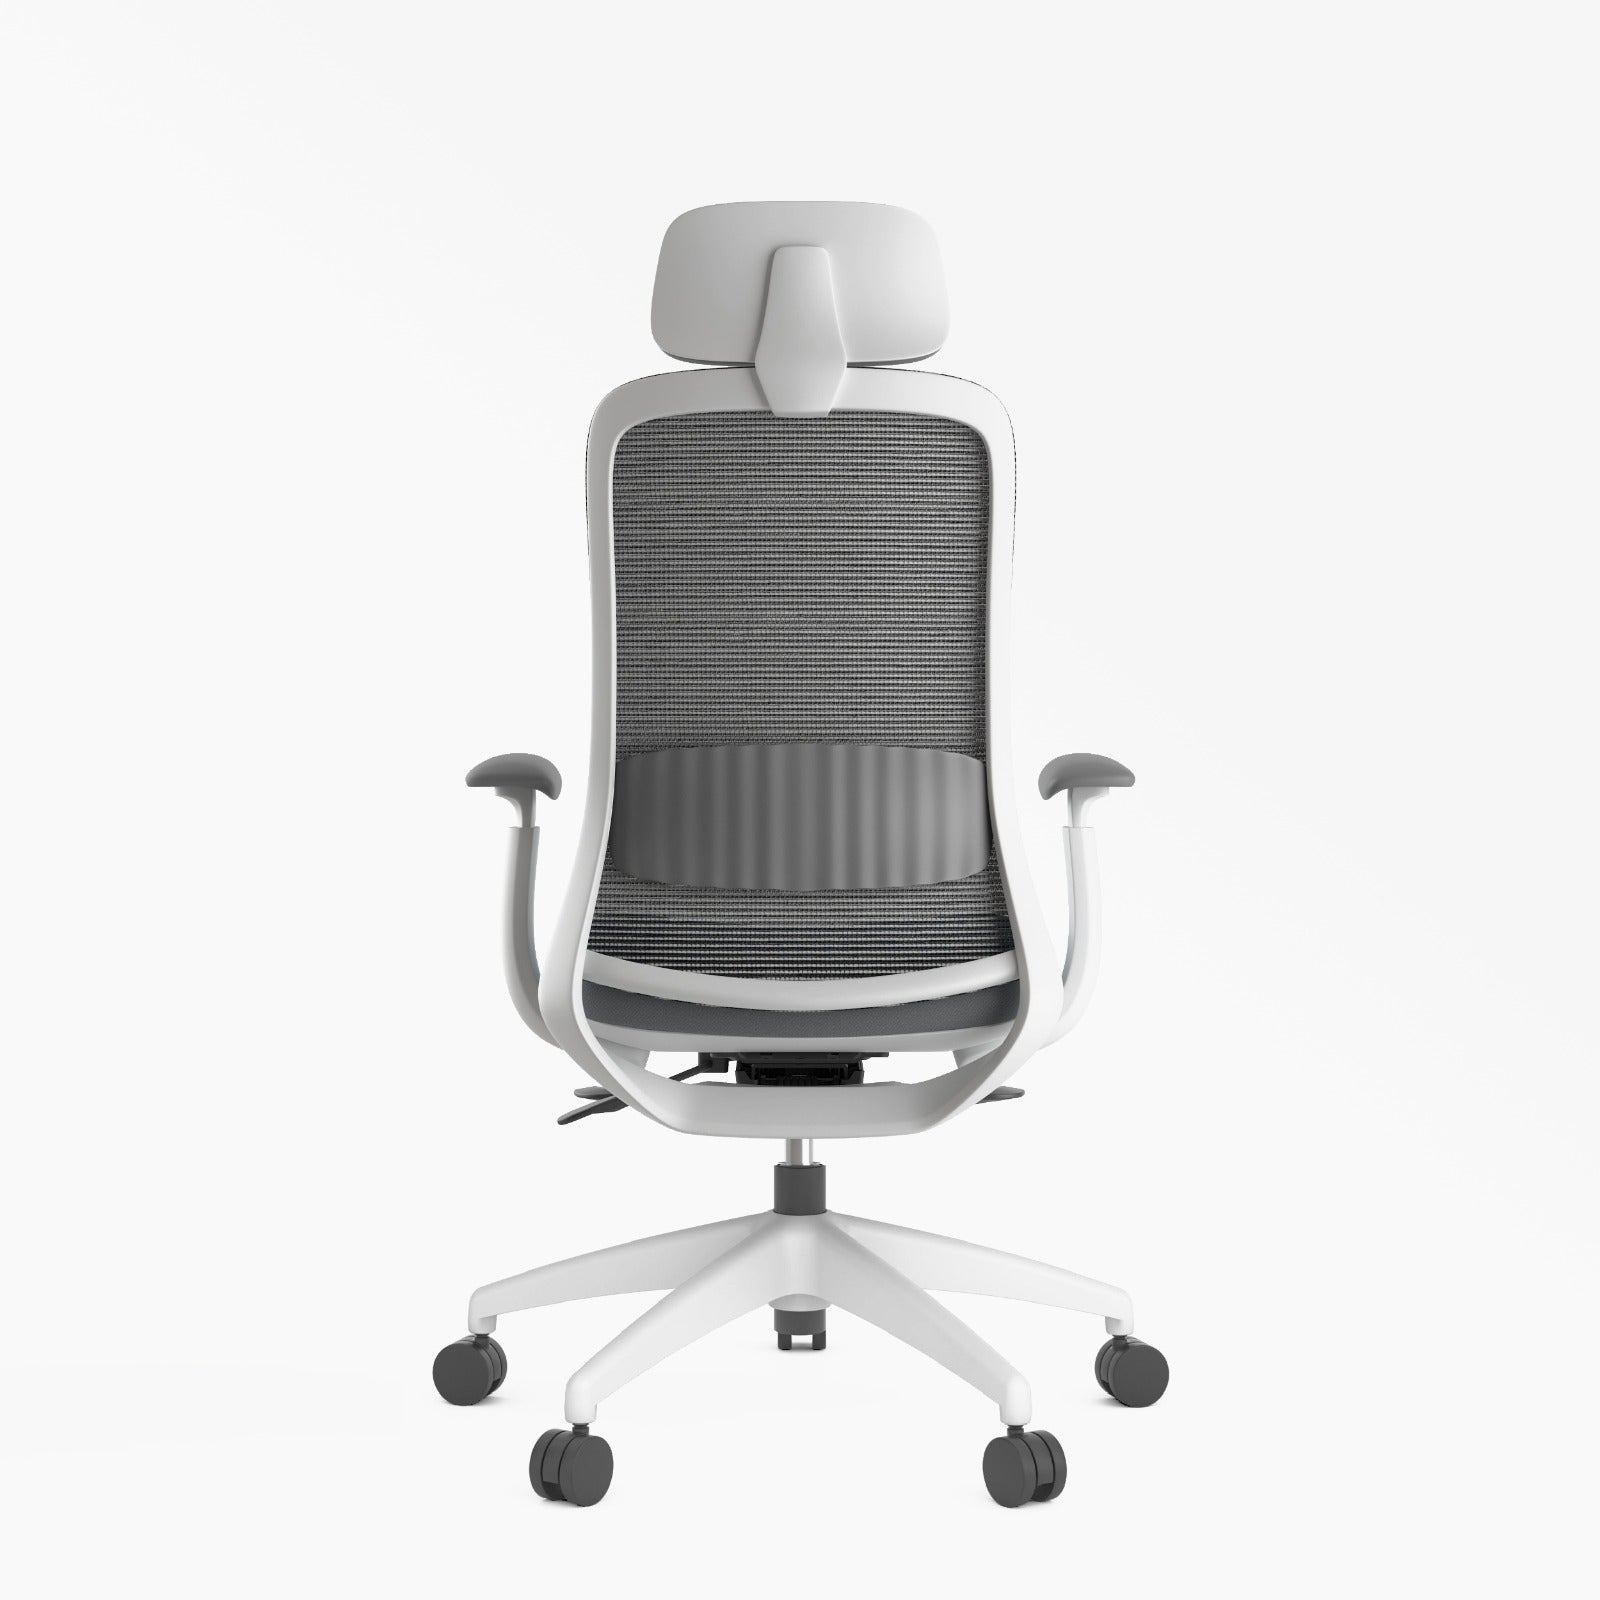 Stella Executive Ergonomic High-back Mesh Chair with Headrest, Dark Gray